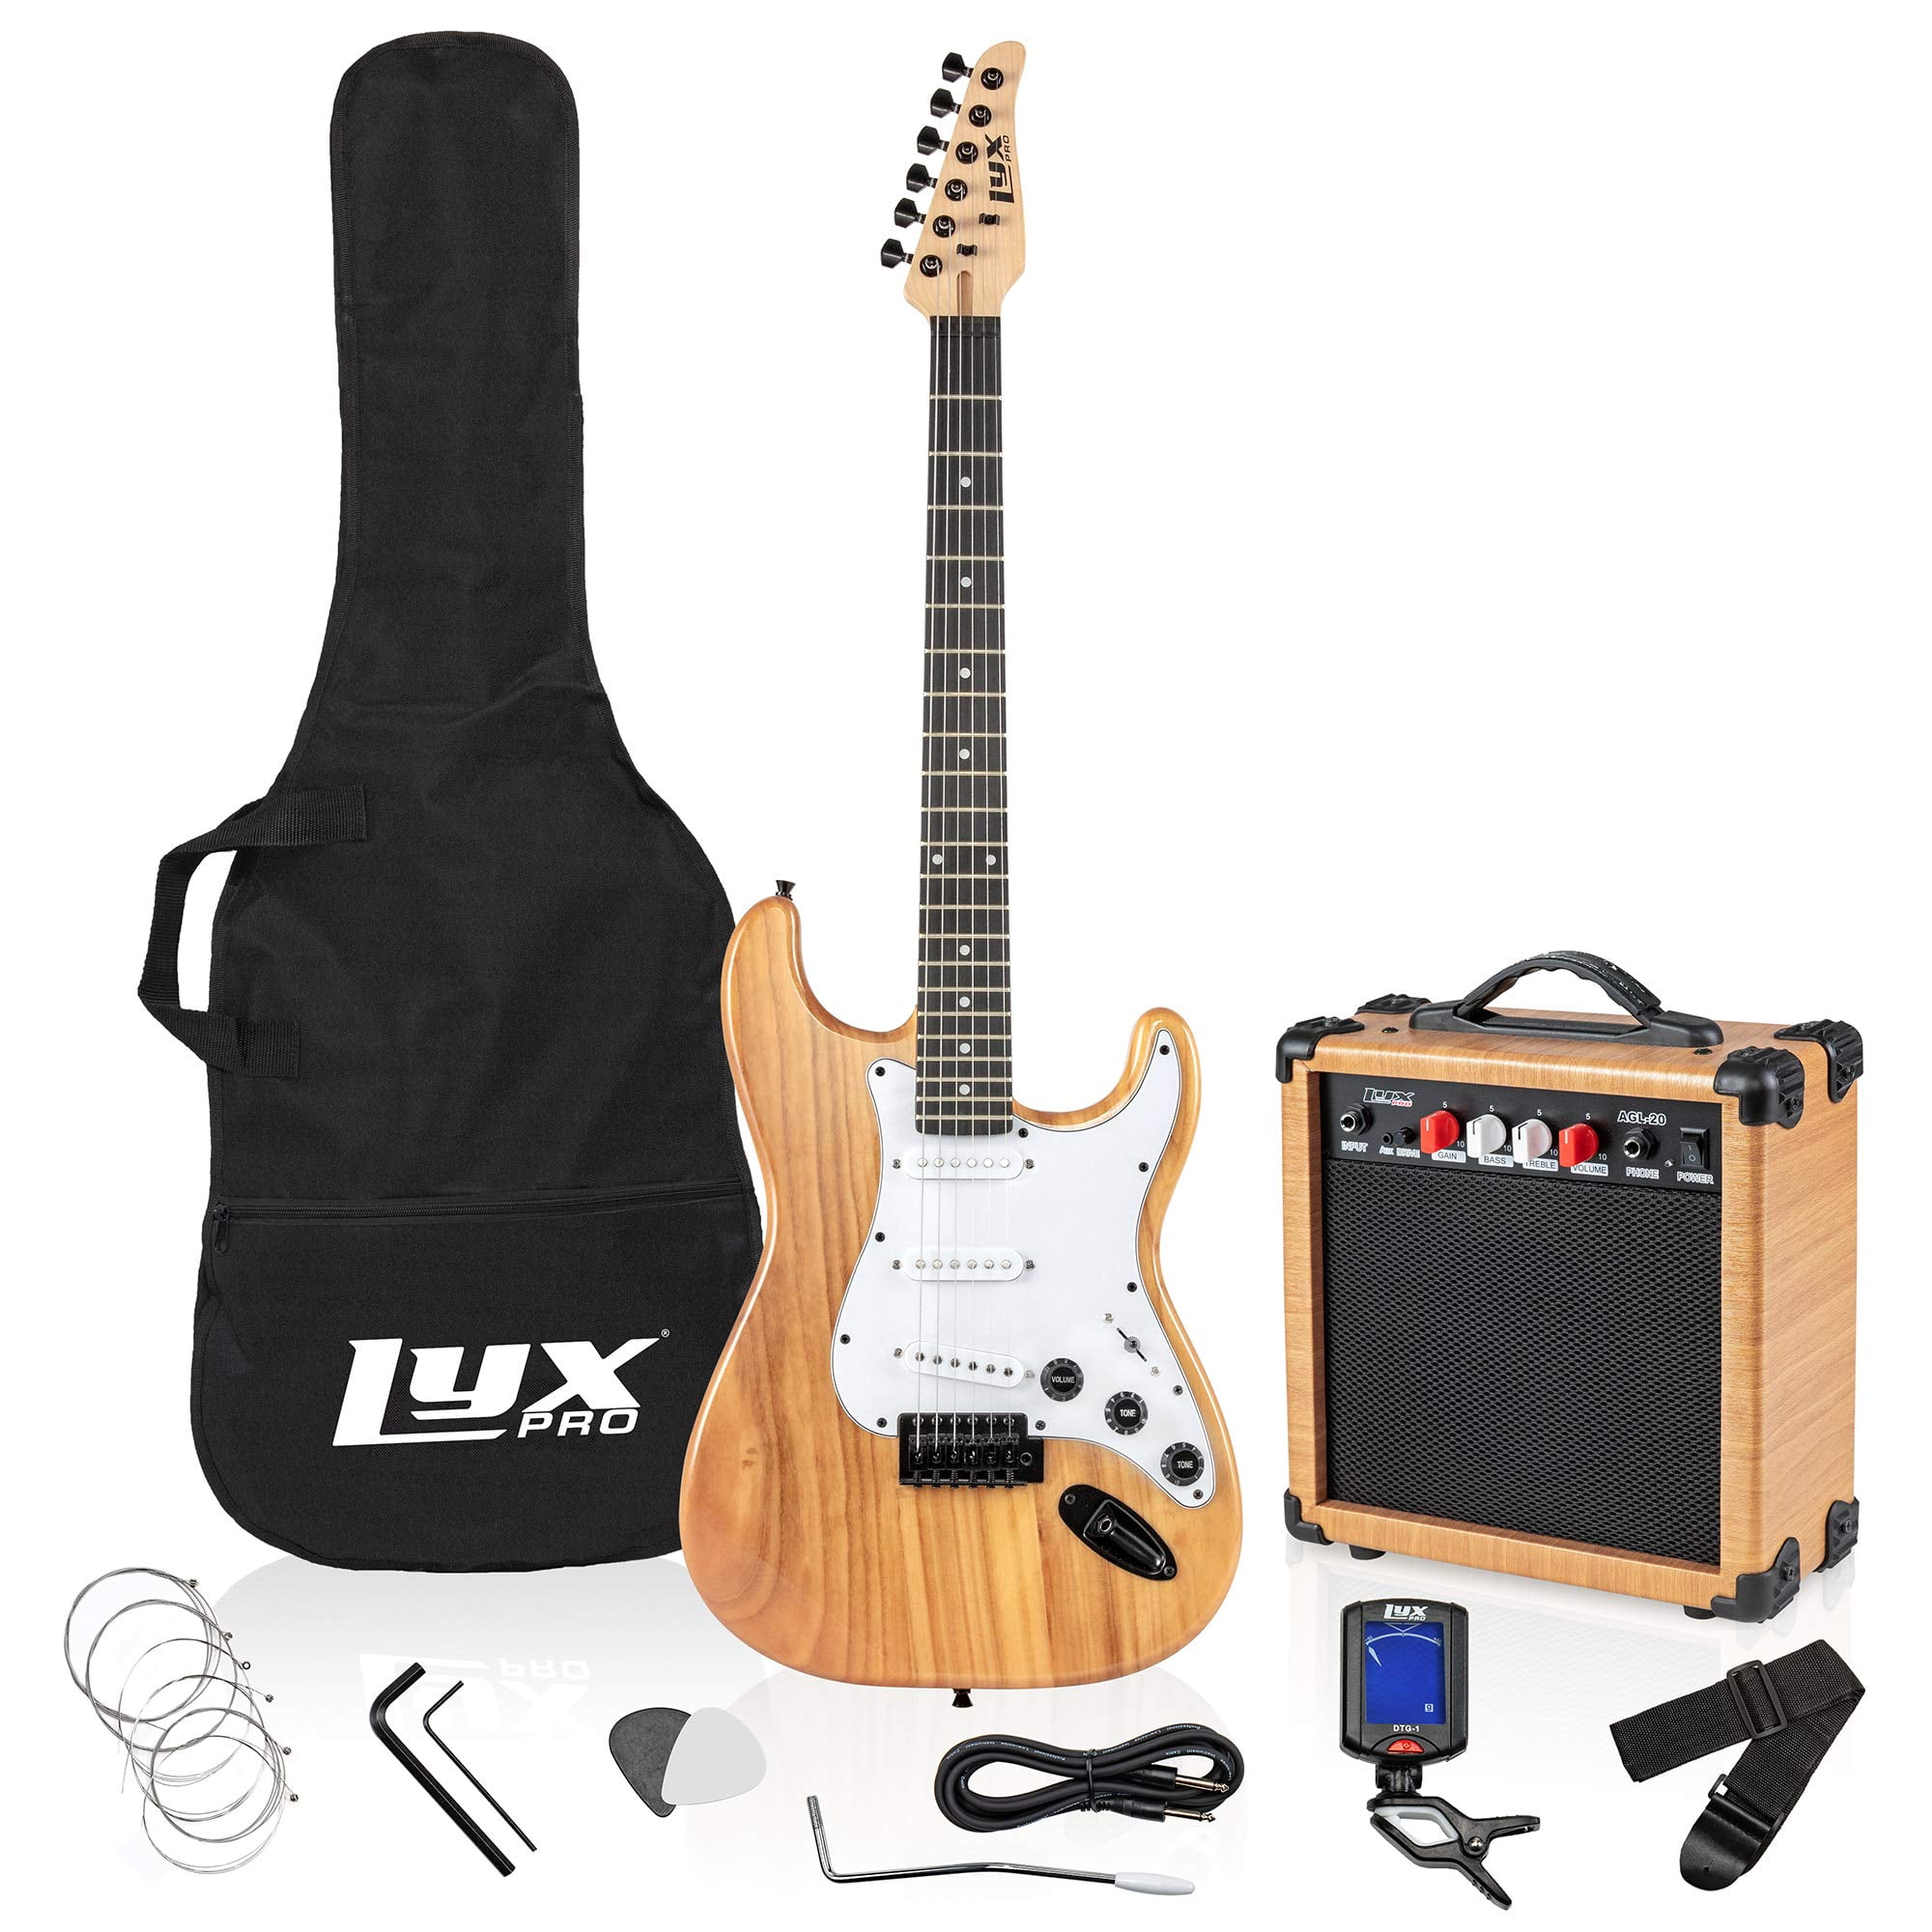 3-Way Pickup Mahogany Wood LyxPro 39” SB Series Electric Guitar Sunburst Volume/Tone Controls Les Paul-Style Kit for Beginner Intermediate & Pro Players Solid Body Guitar Bonus 2-Pack of Picks 